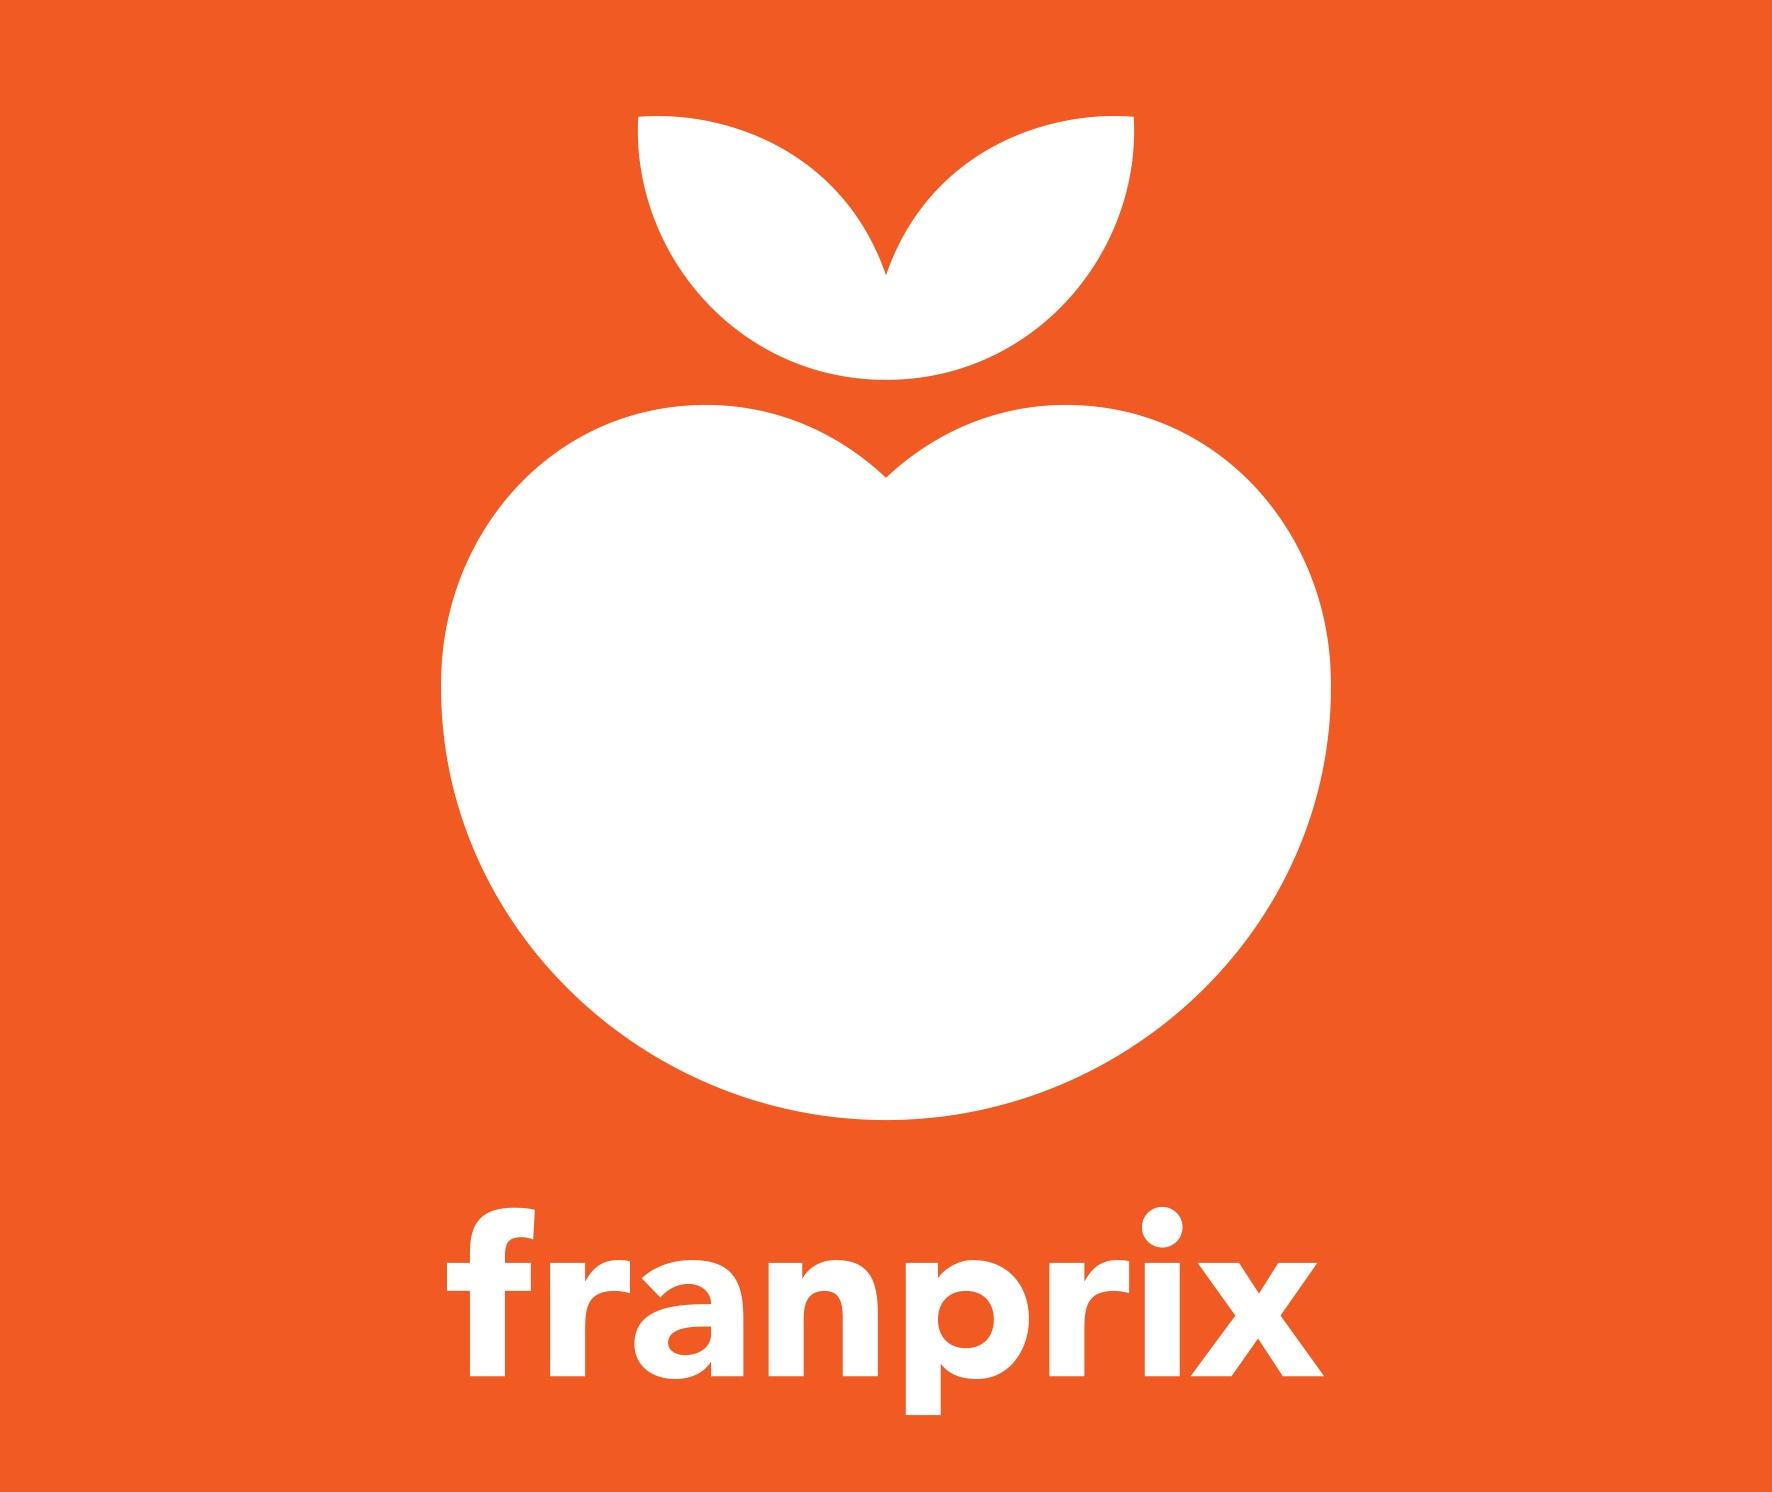 Franprix Rely